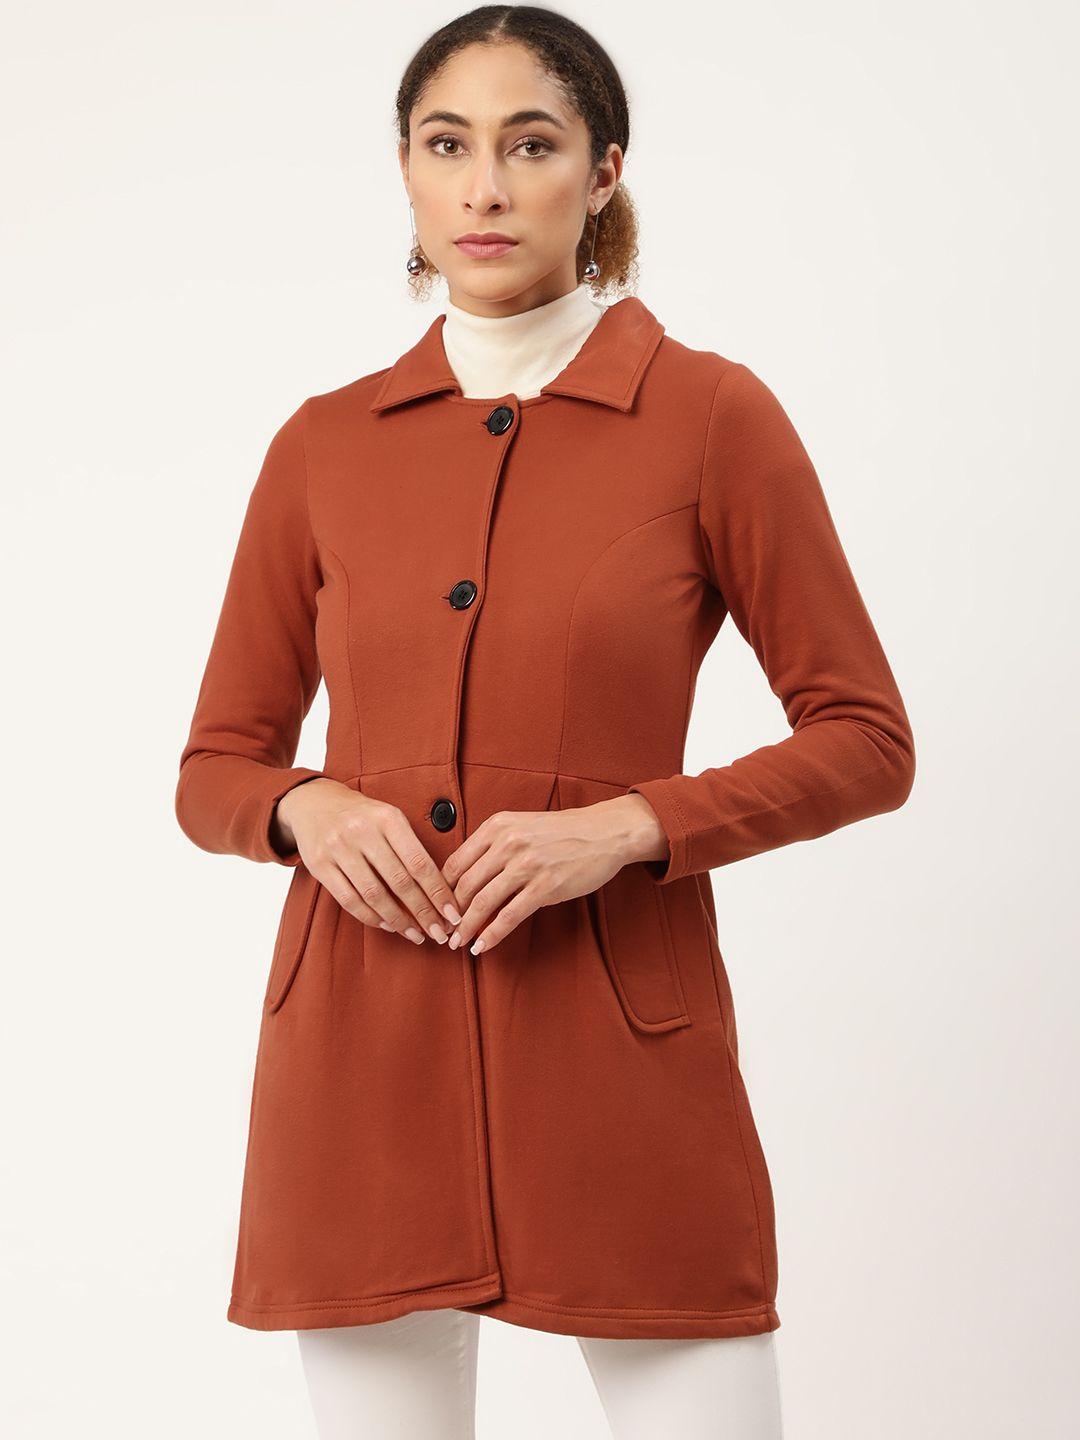 alsace lorraine paris women orange solid overcoat